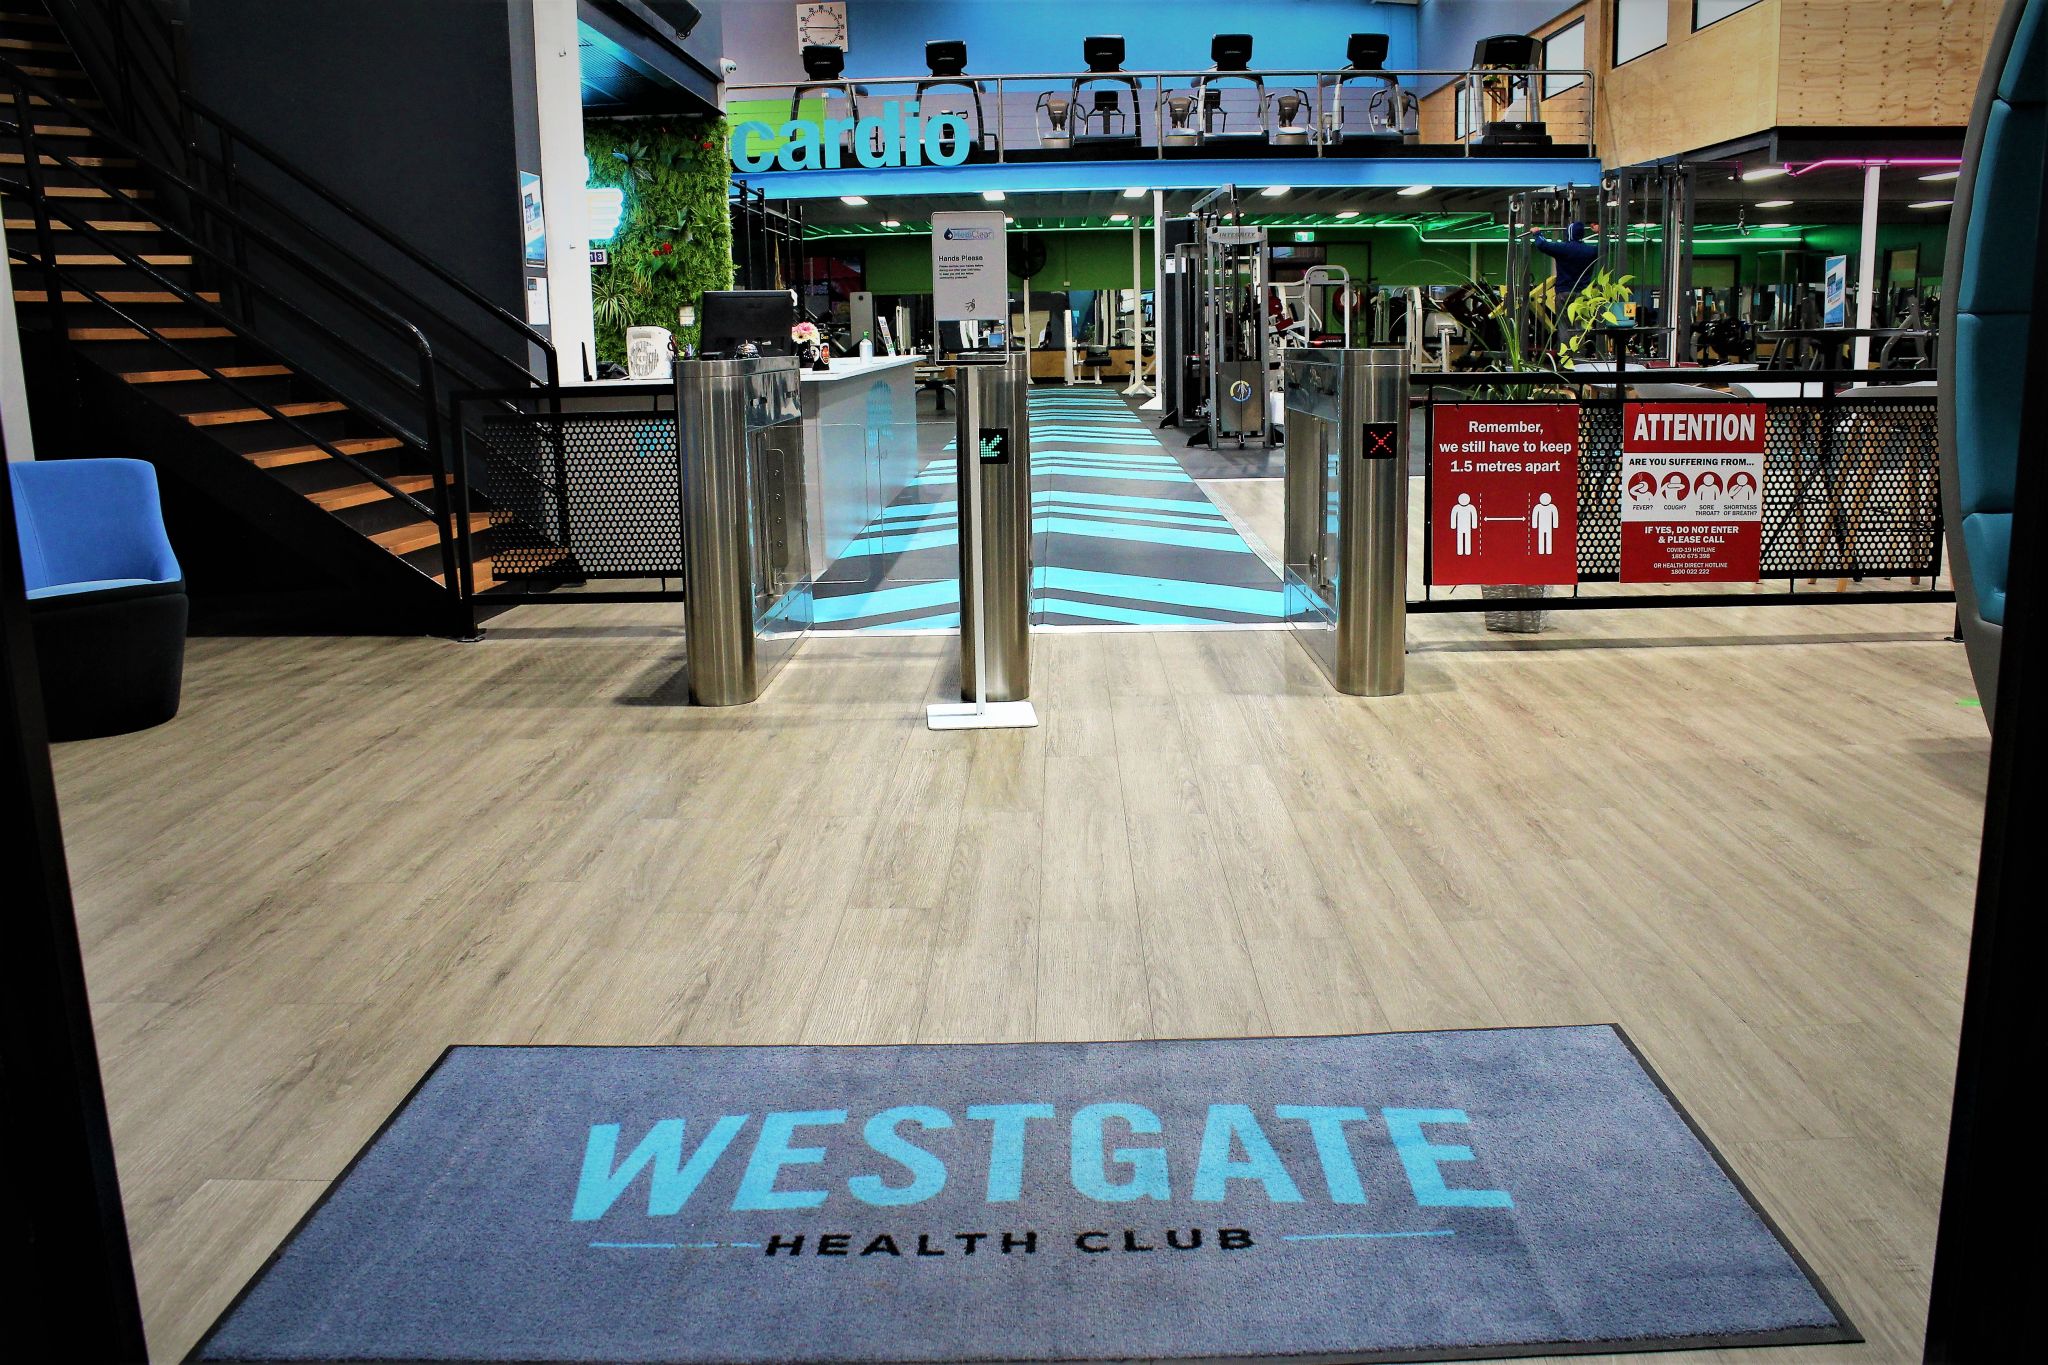 Westgate Health Club West Melbourne S Best Health Club